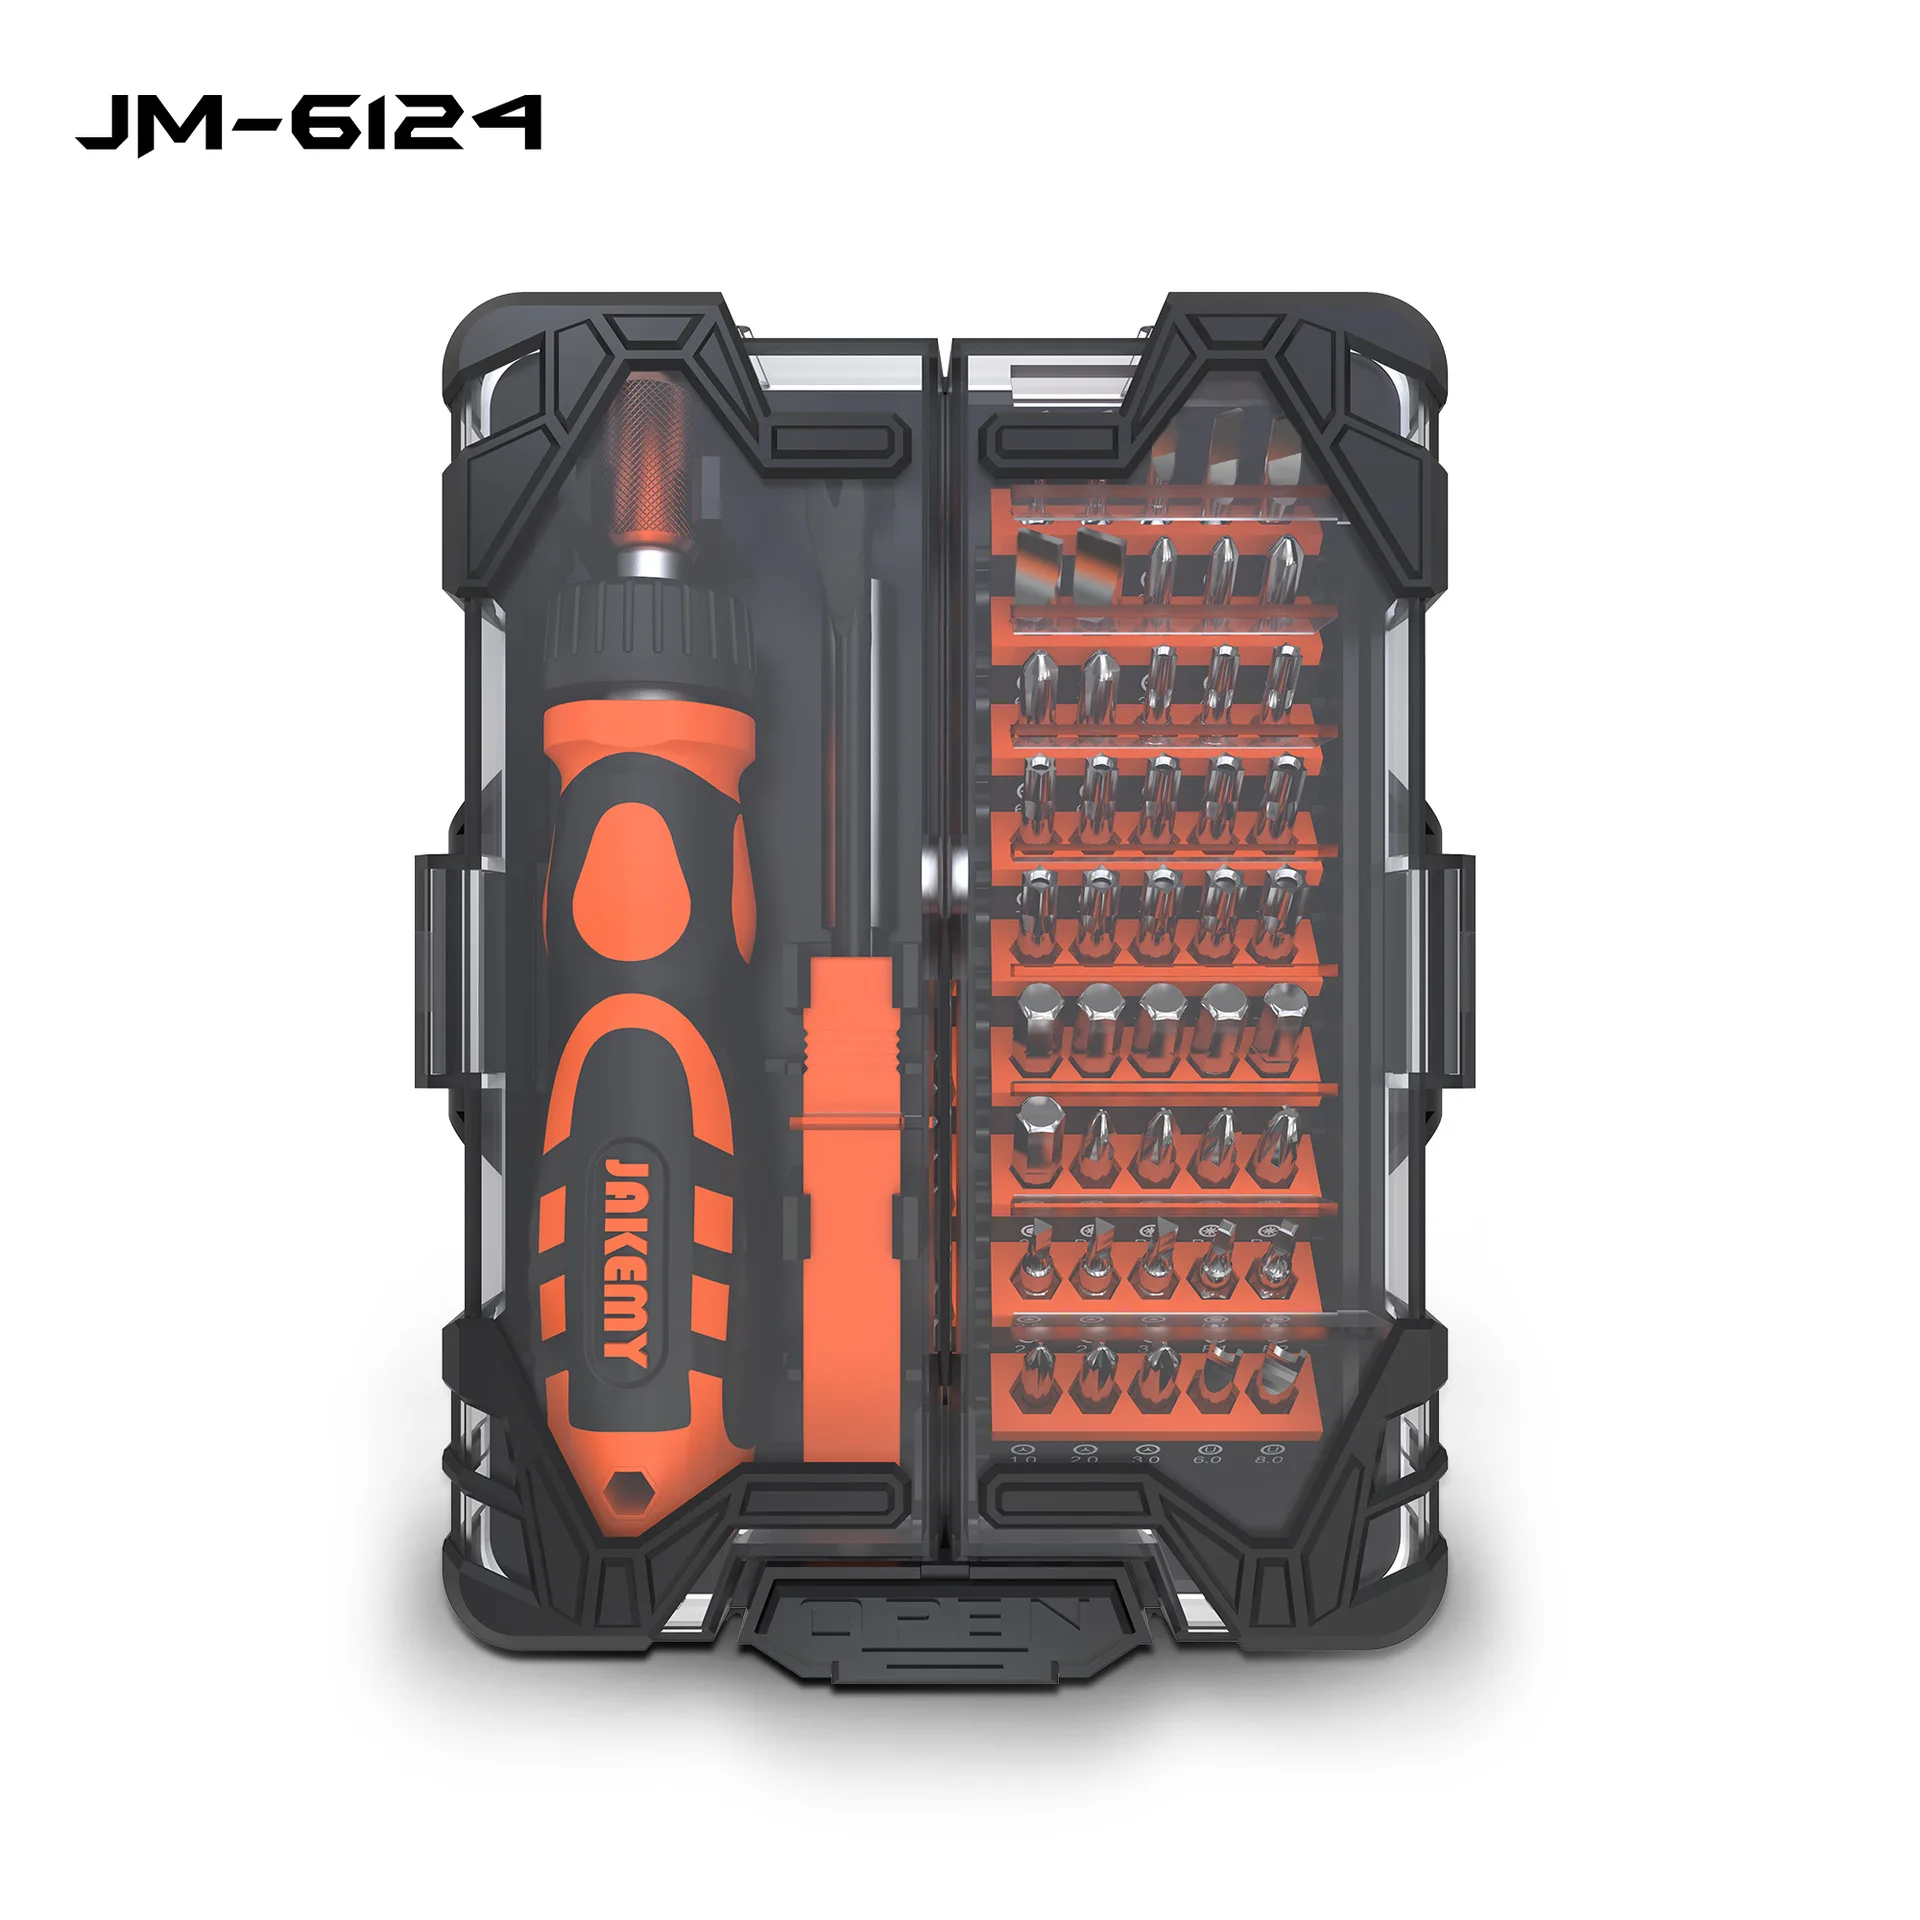 

JAKEMY 48 in 1 Ratchet Handle Tool Combination Screwdriver Set JM-6124 Home Appliance Maintenance Auto Repair Screwdriver